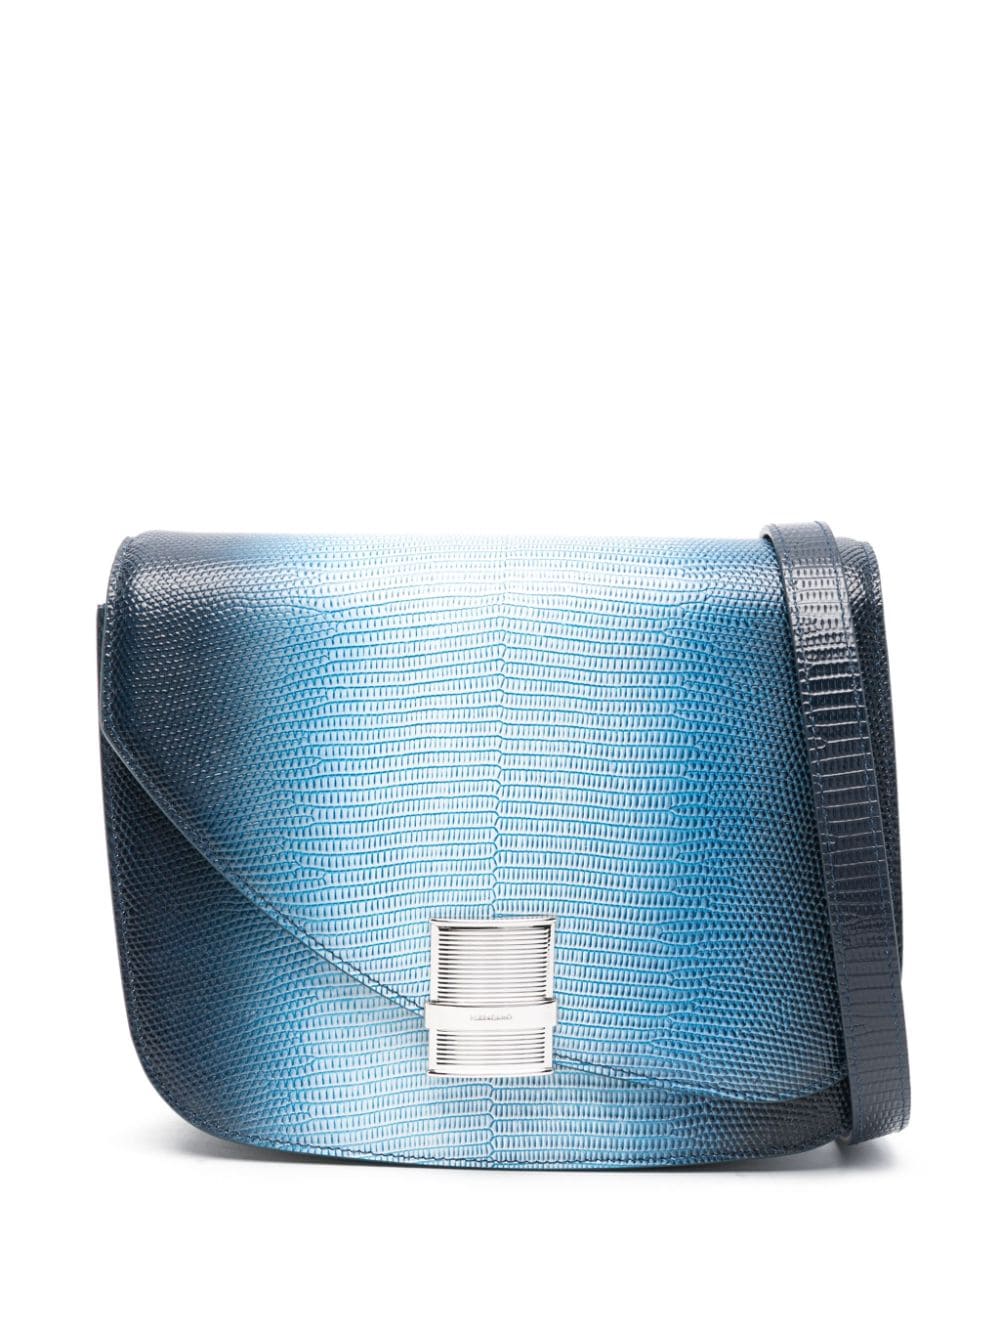 Ferragamo Fiamma leather shoulder bag - Blue von Ferragamo